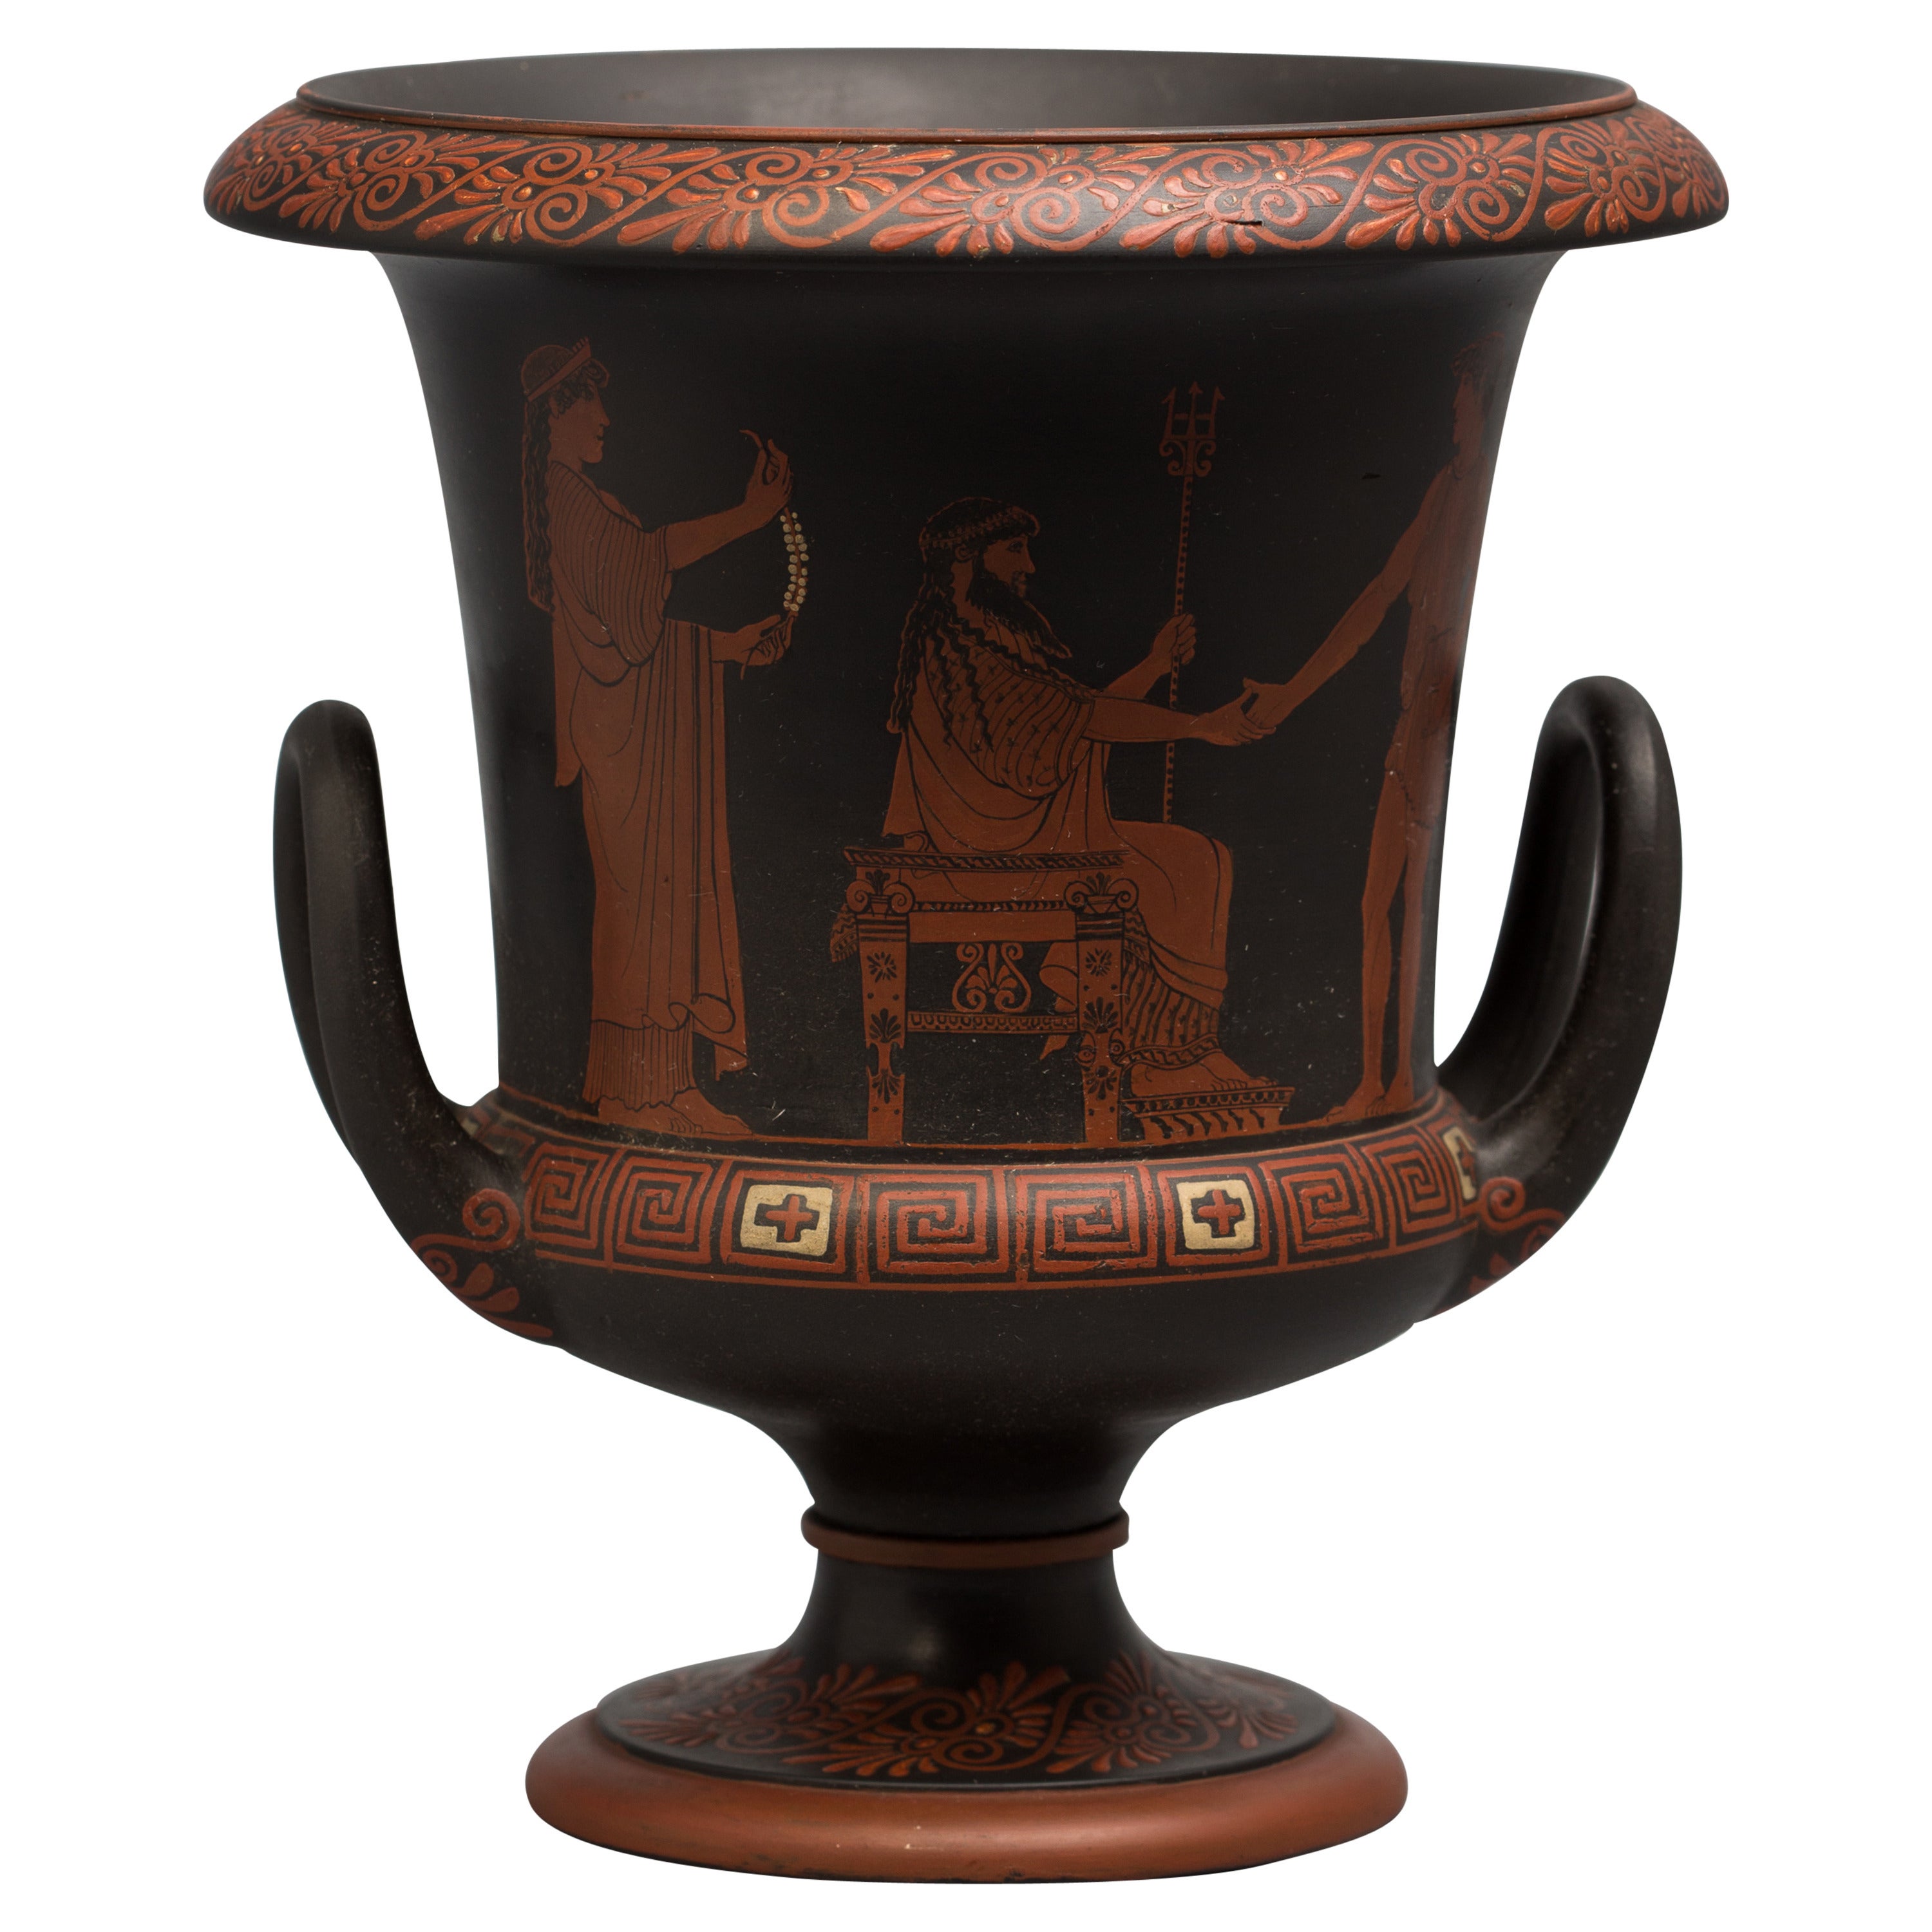 Wedgwood Rosso-Antico Vase, circa 1790